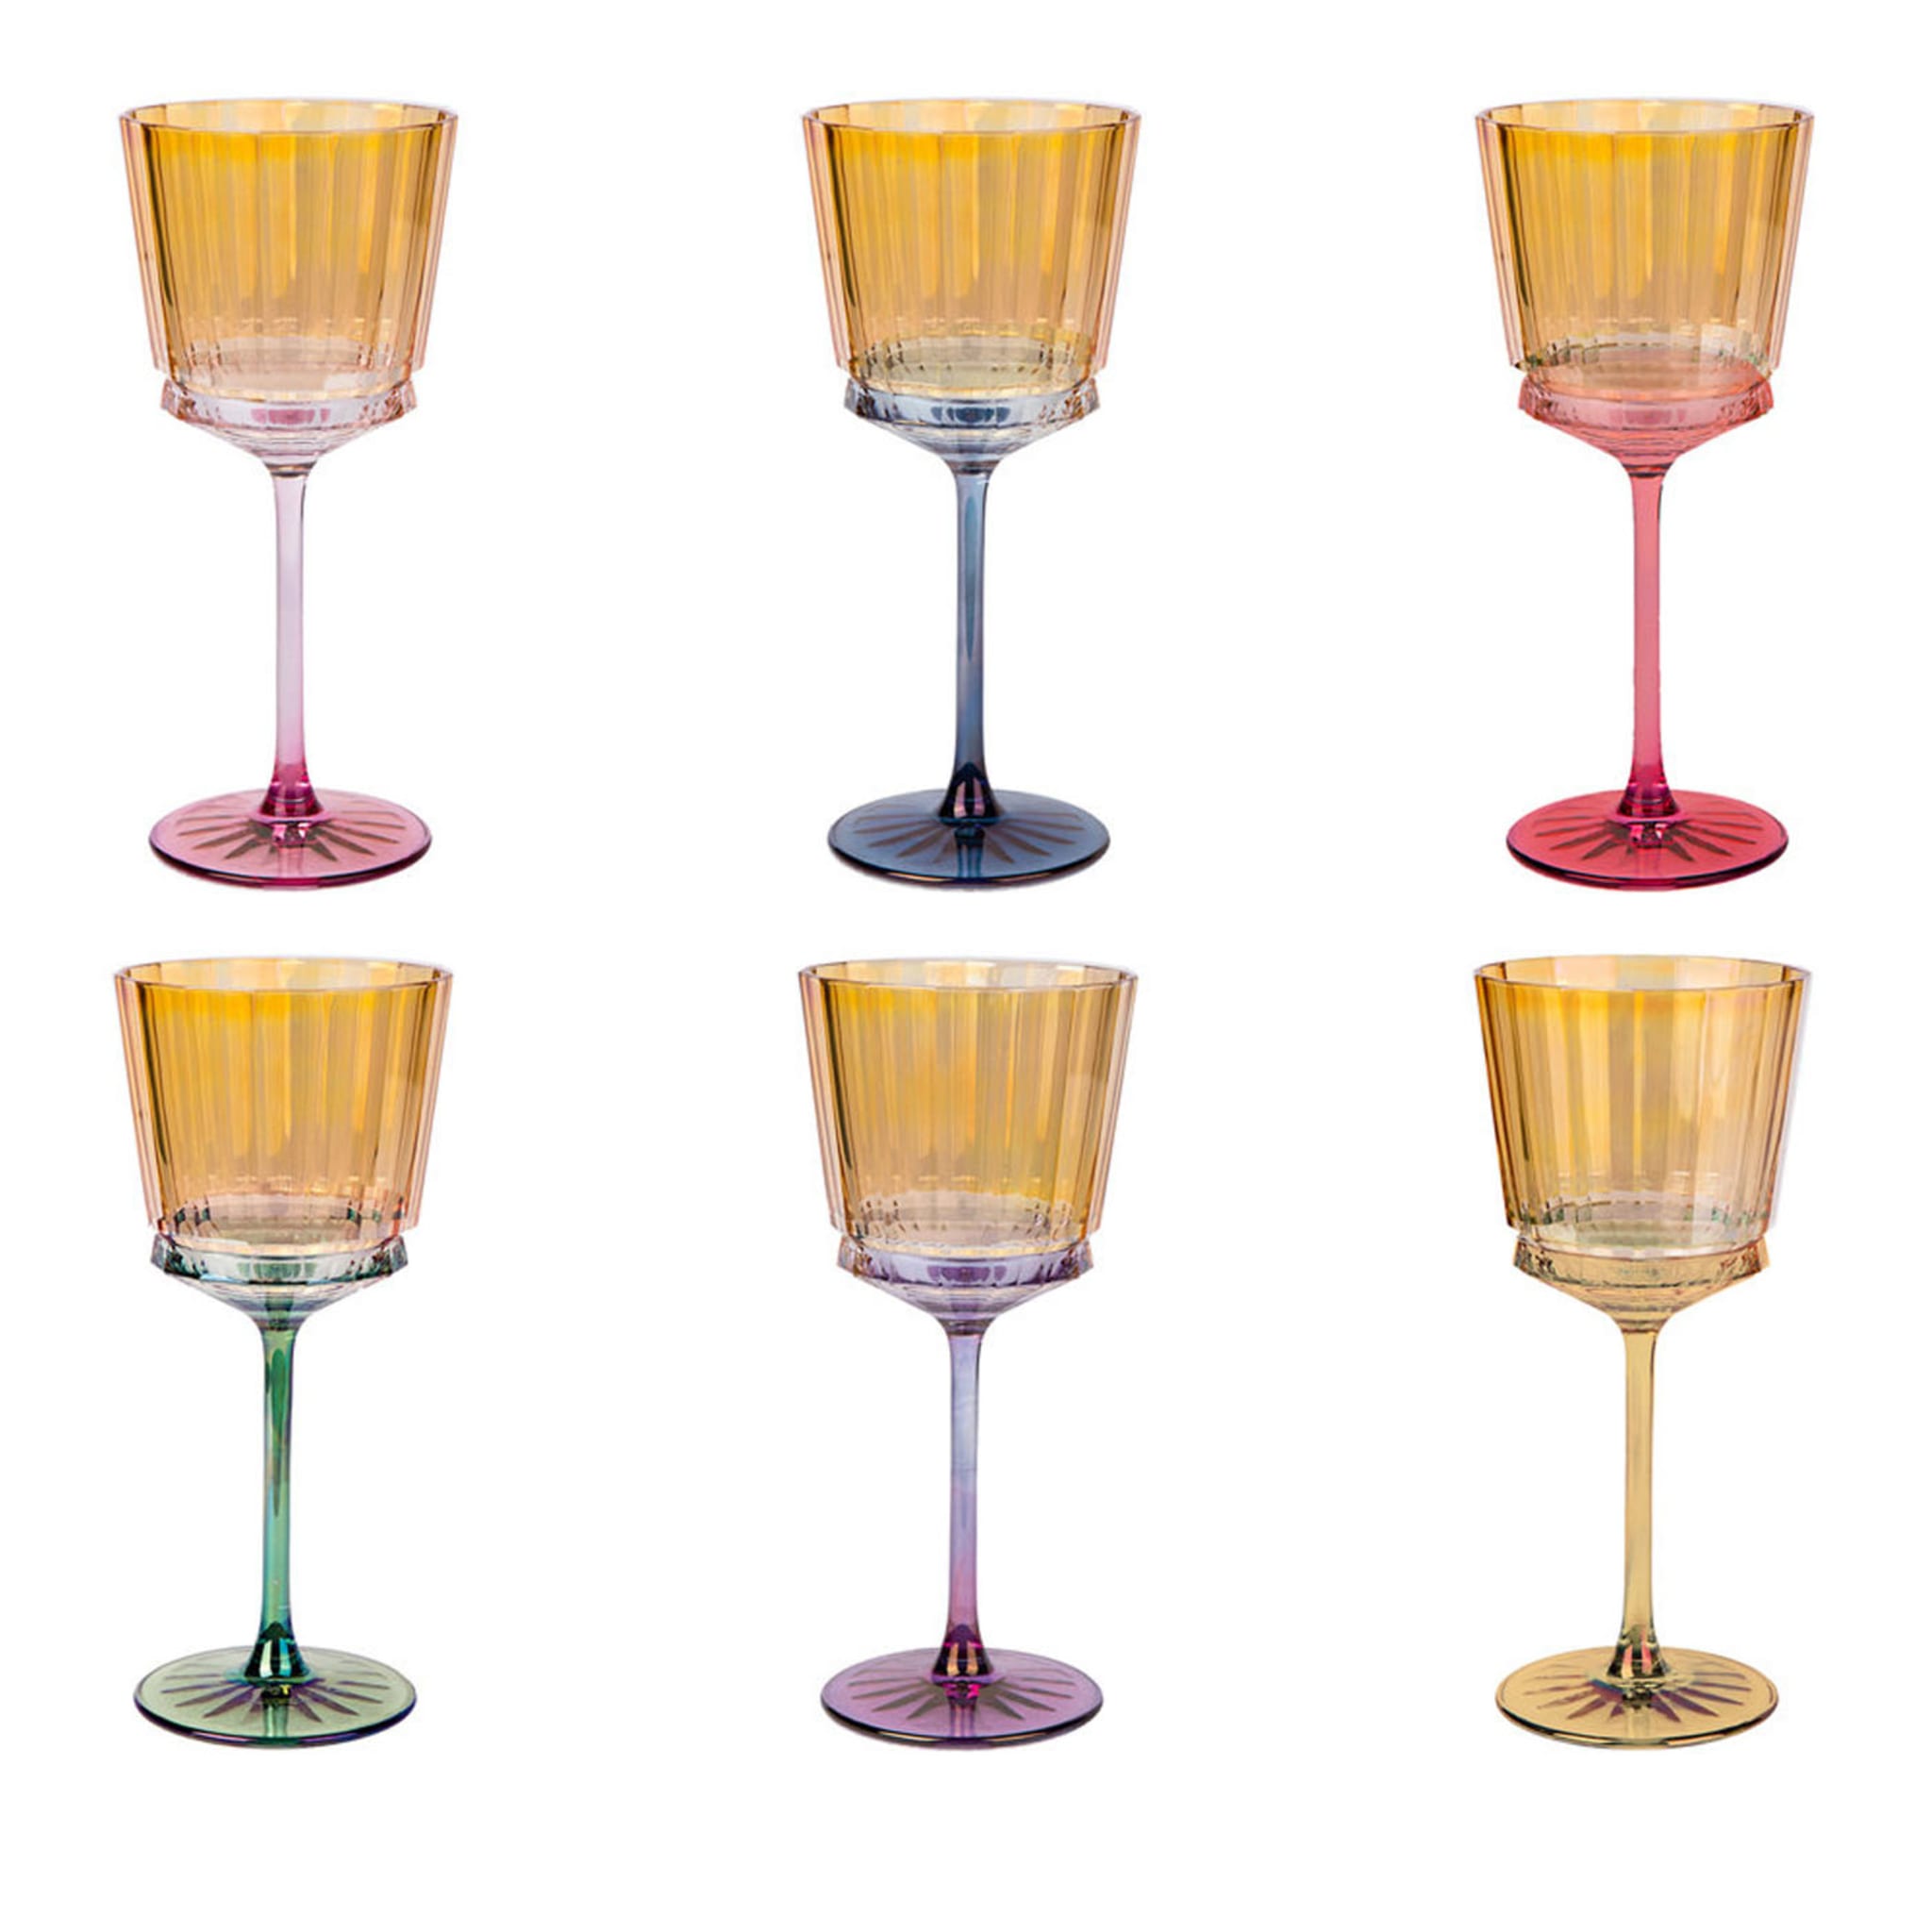 Madagascar Set of 6 Wine Glasses - Main view